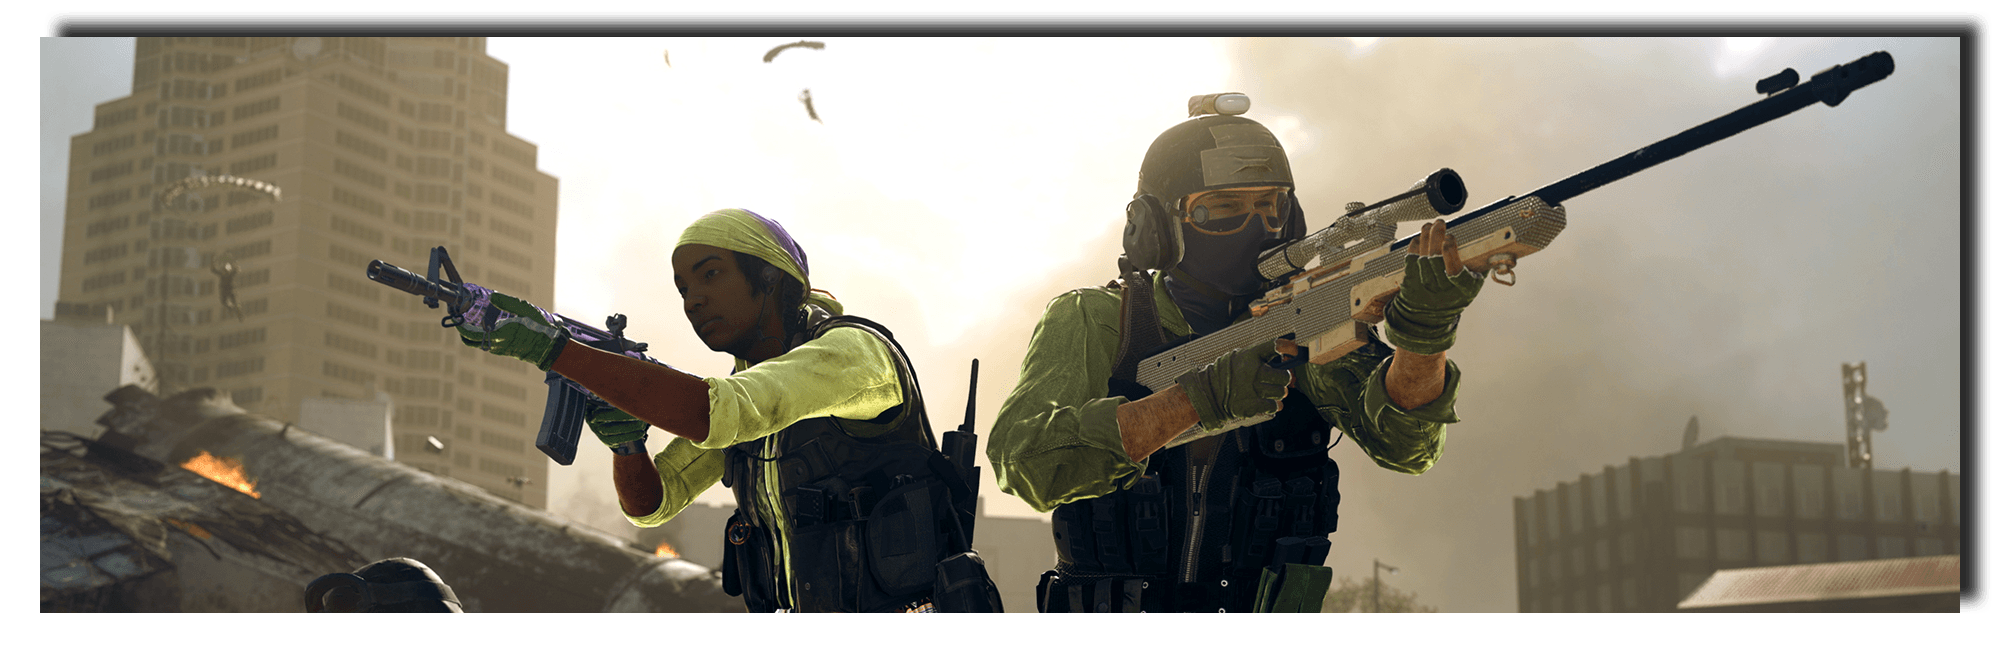 Banner image of Operators preparing for battle.